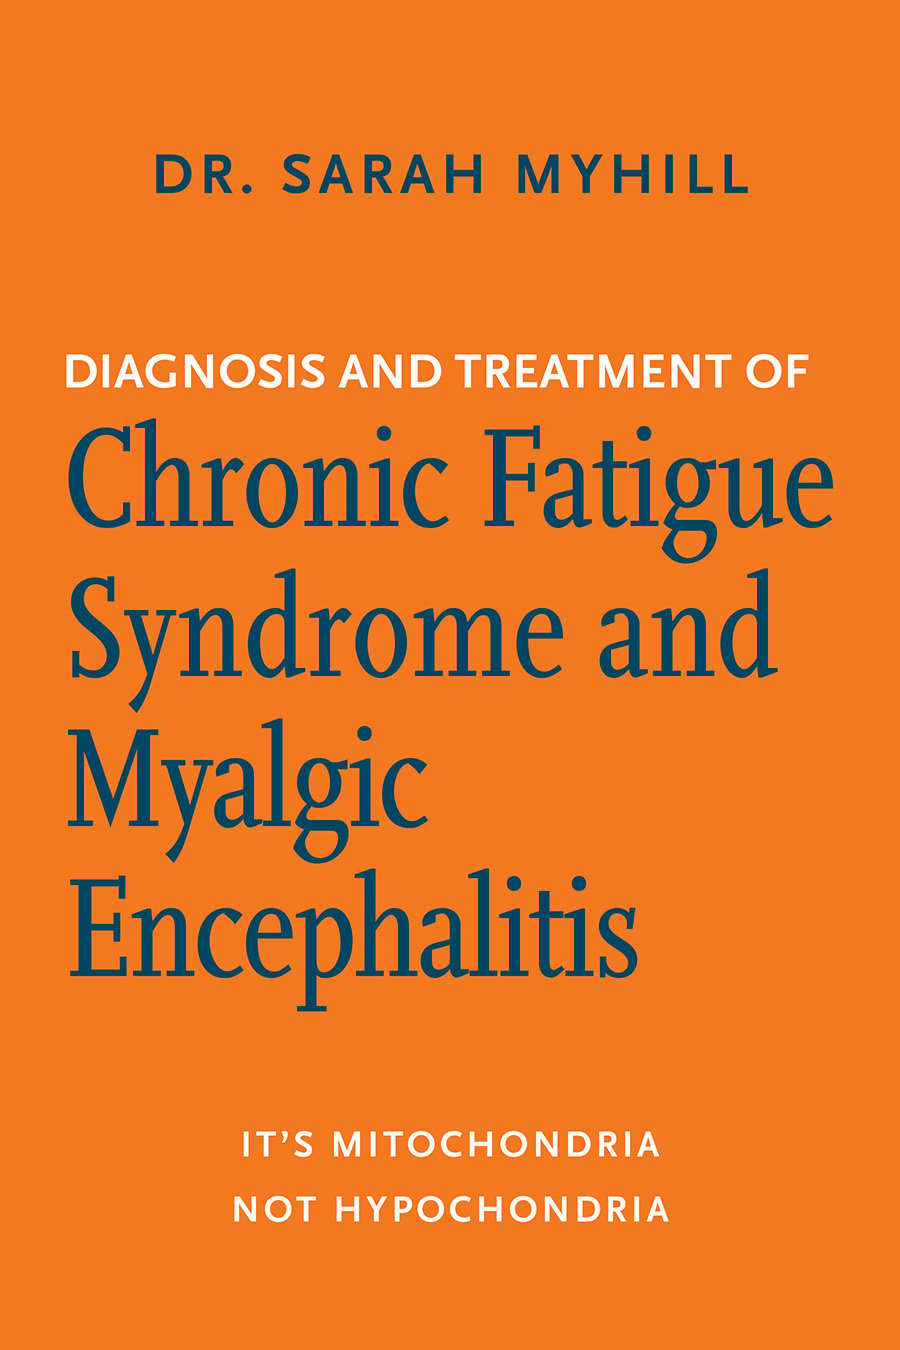 The Diagnosis and Treatment of Chronic Fatigue Syndrome and Myalgic Encephalitis